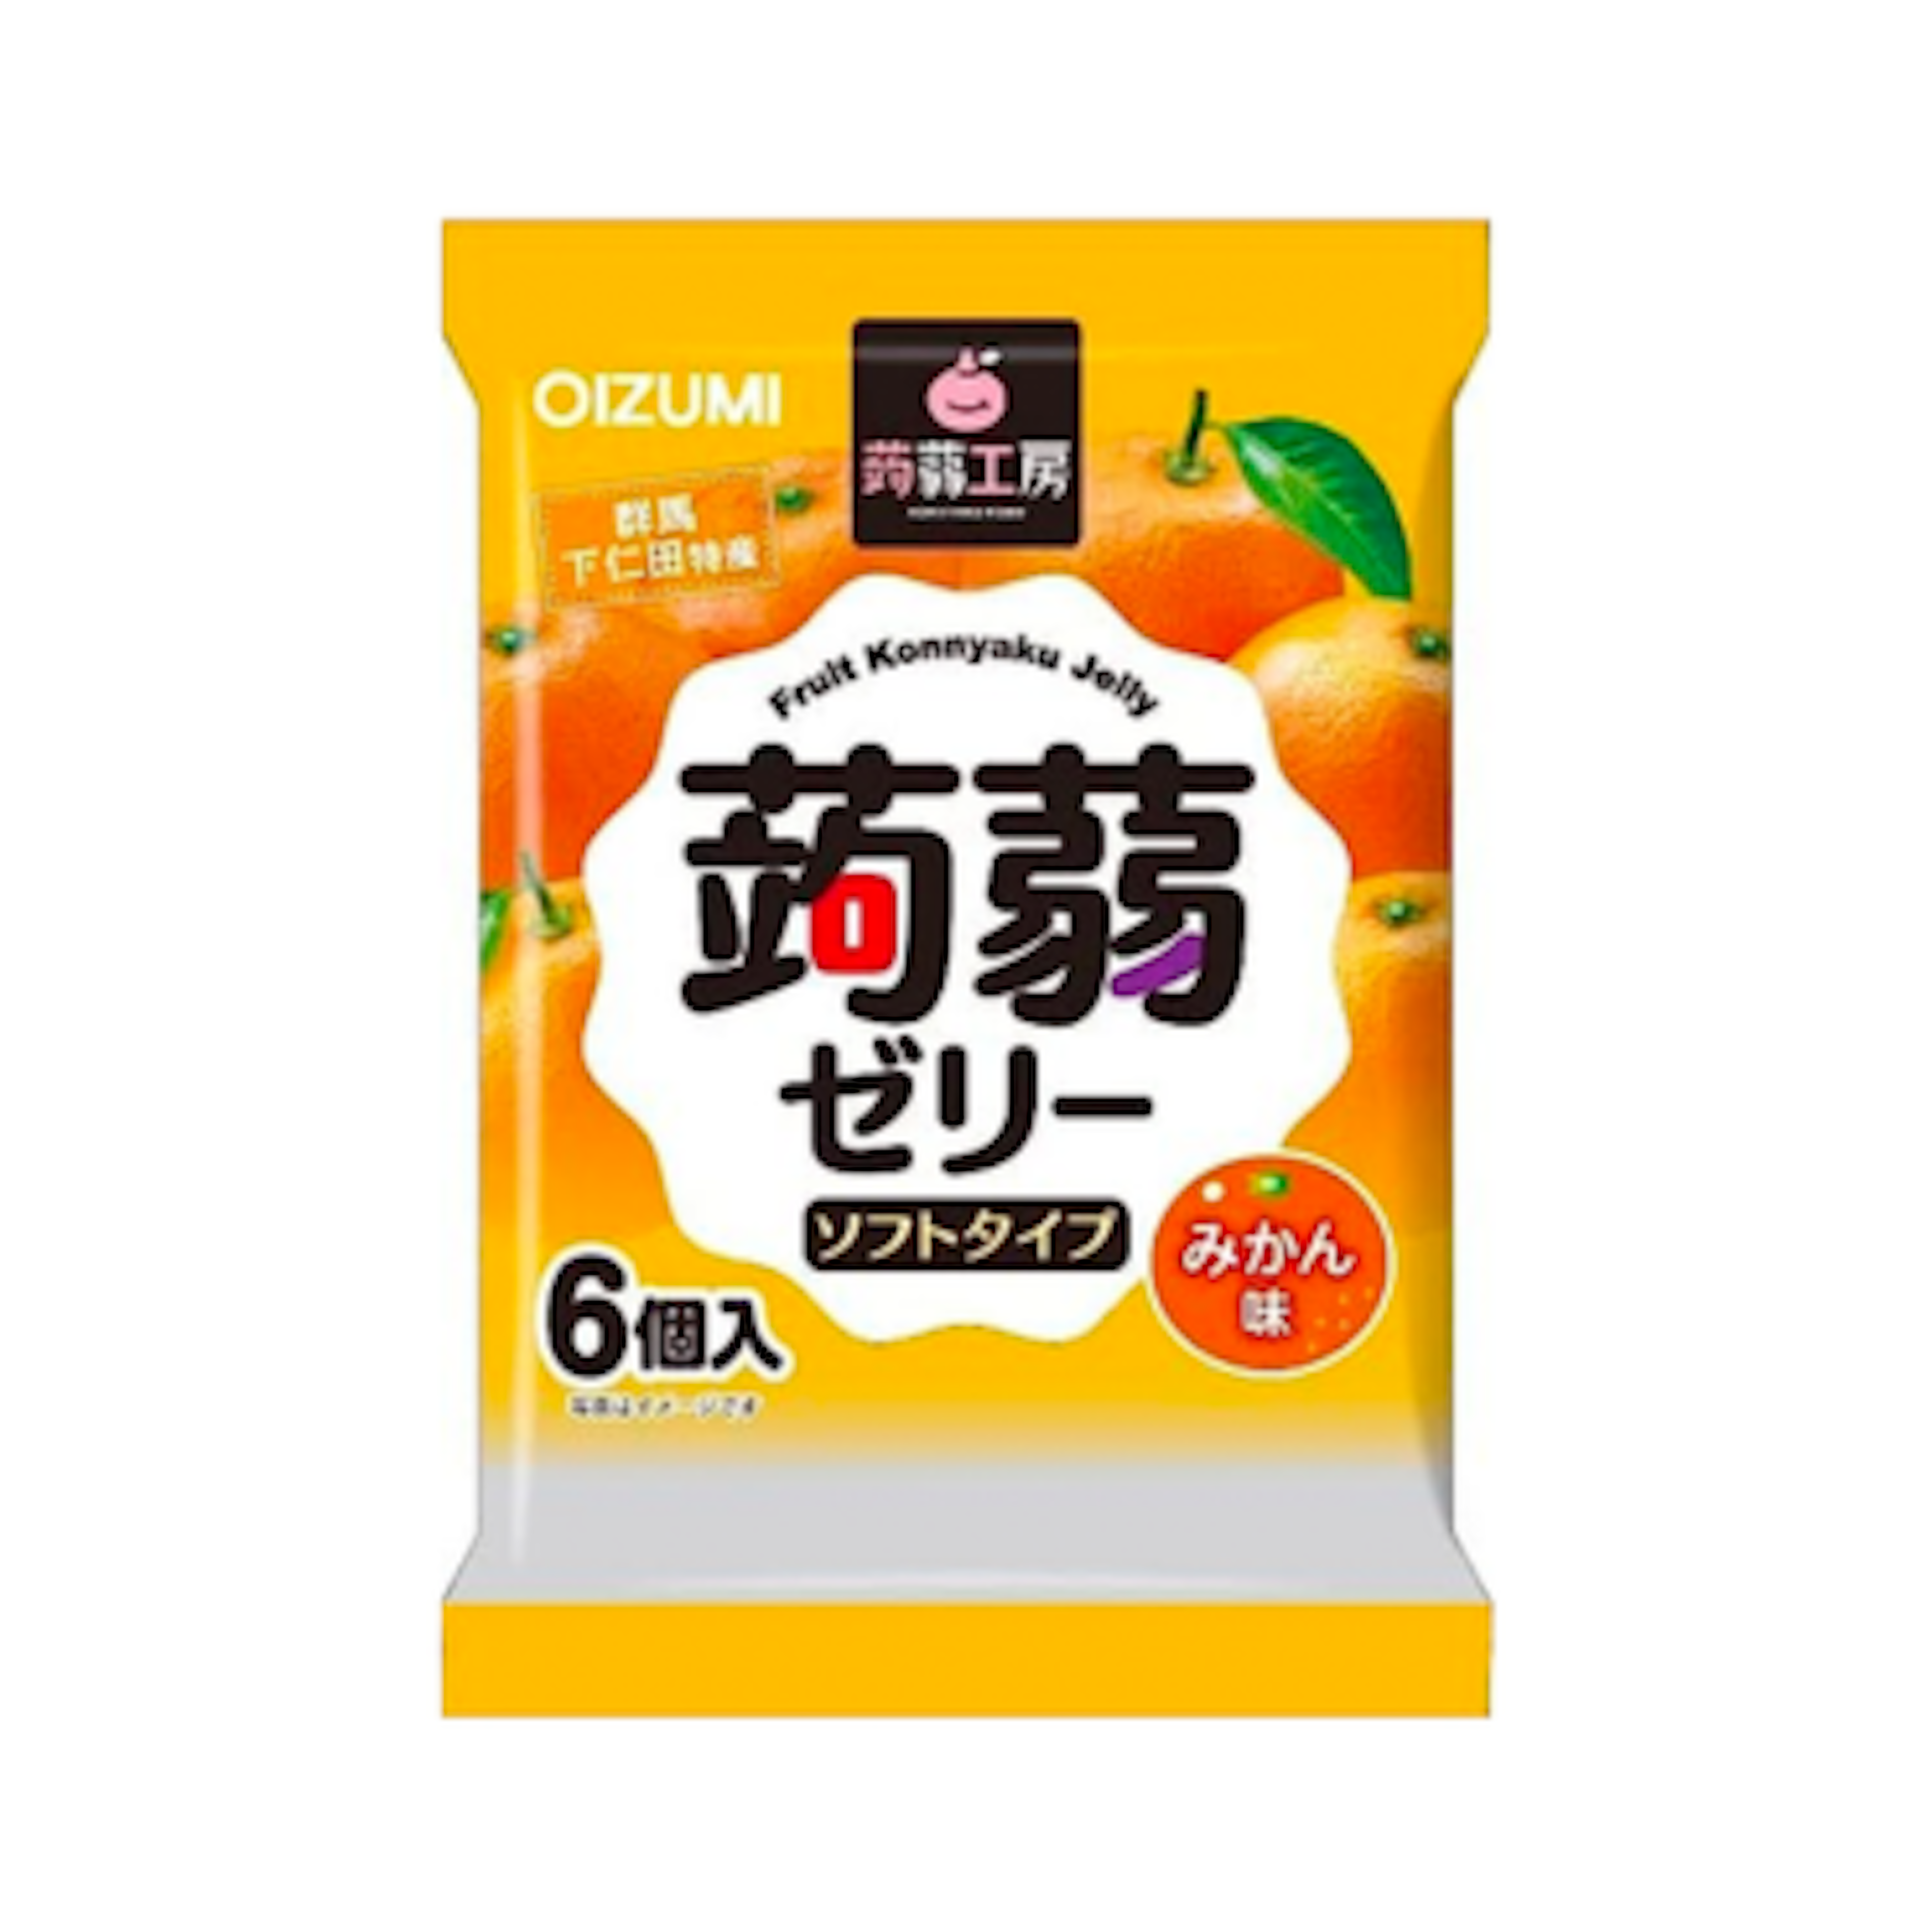 OIZUMI Konjak Jelly Mandarine 106g - Kalorienarmer und gesunder Snack